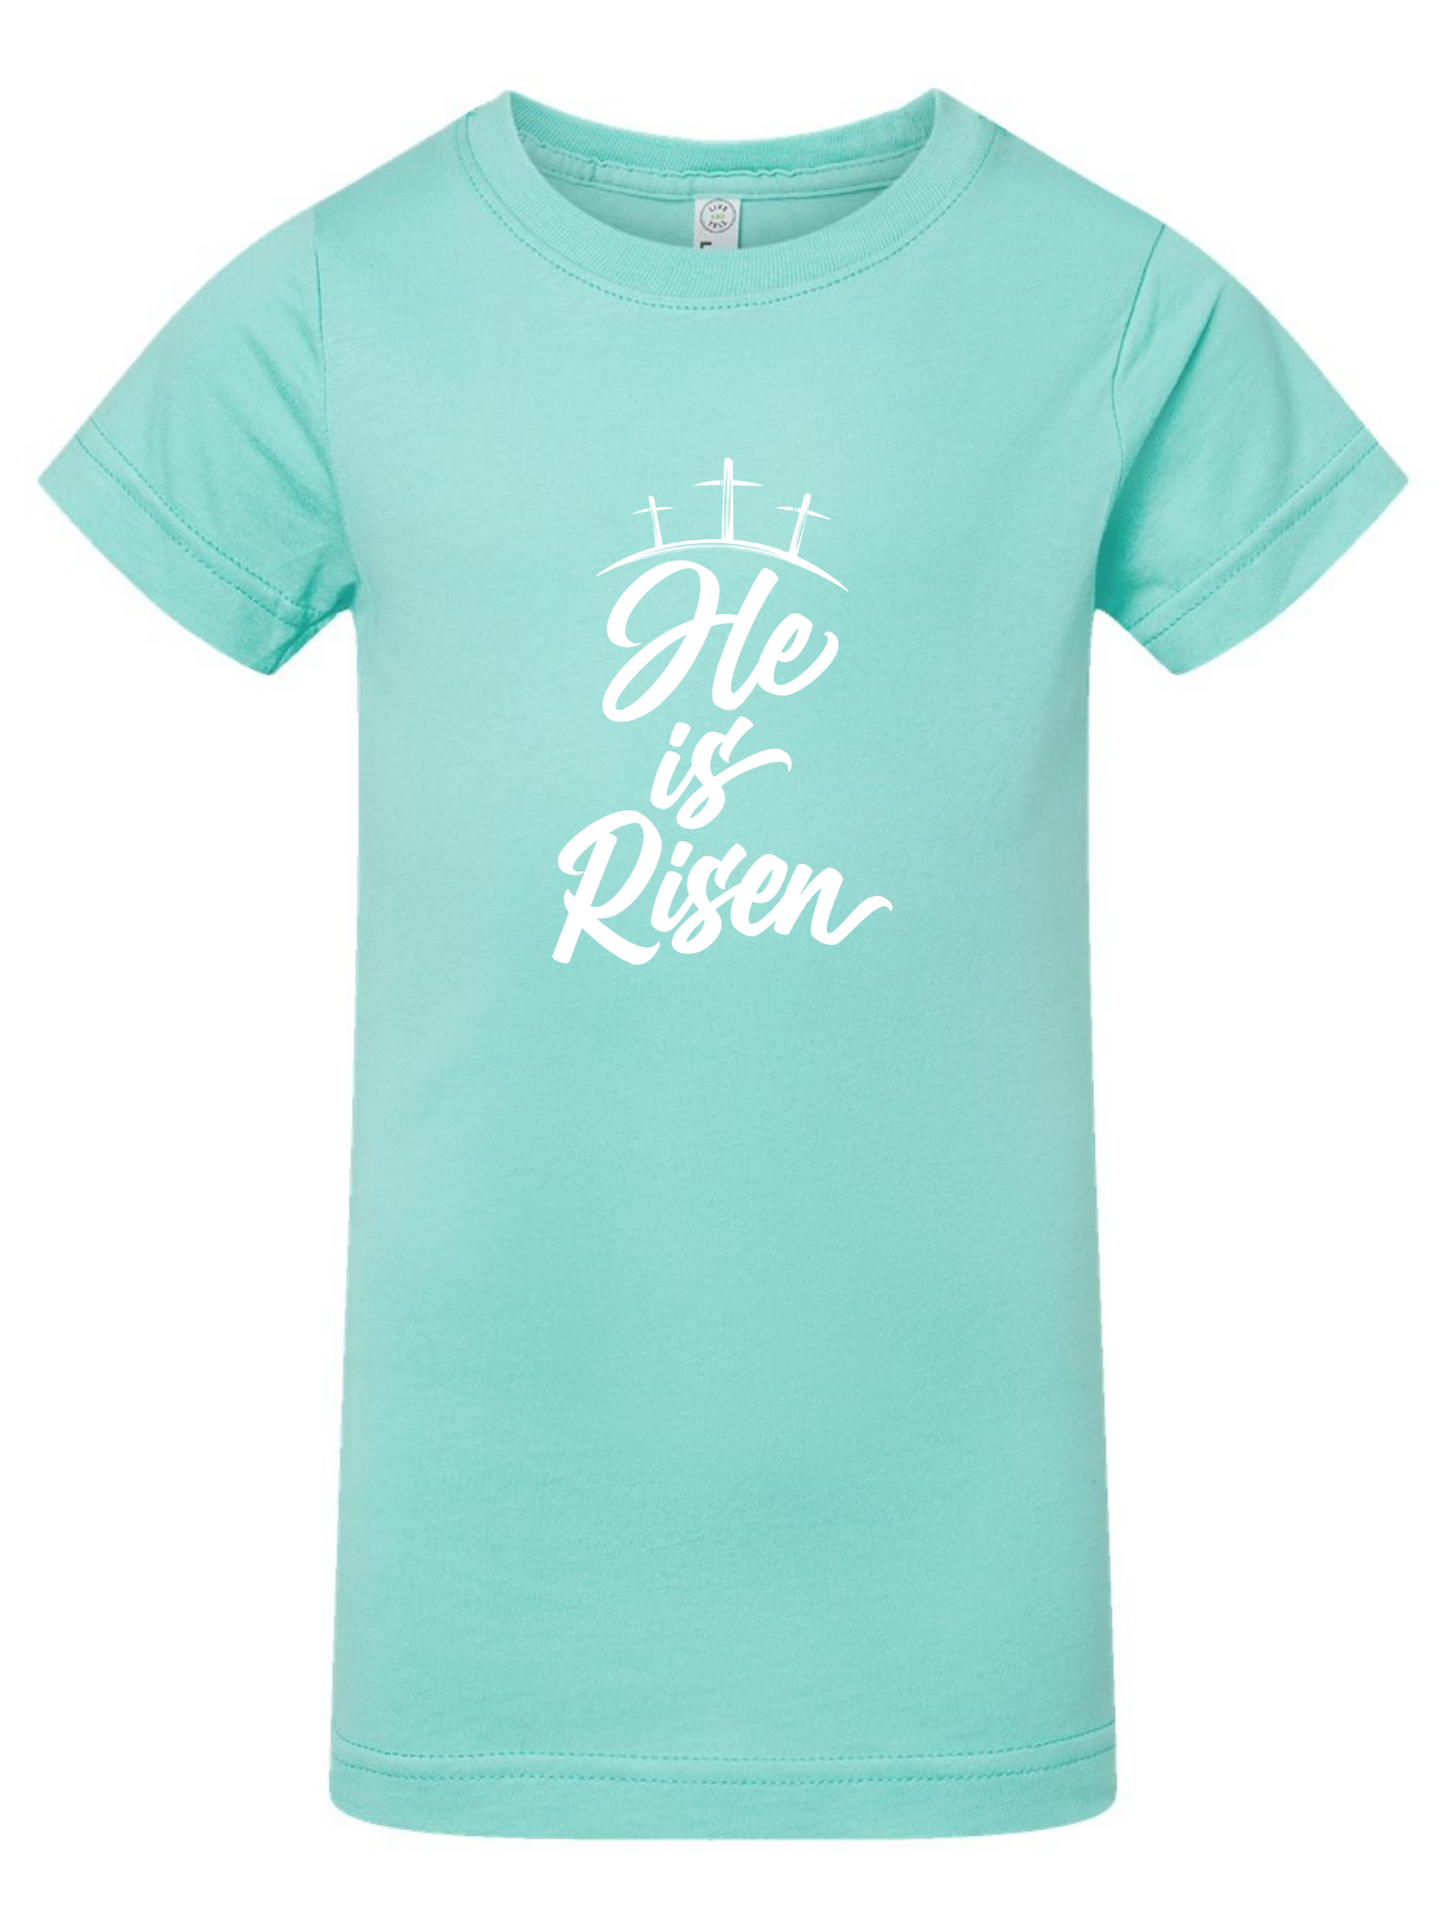 'He is Risen' T-Shirt